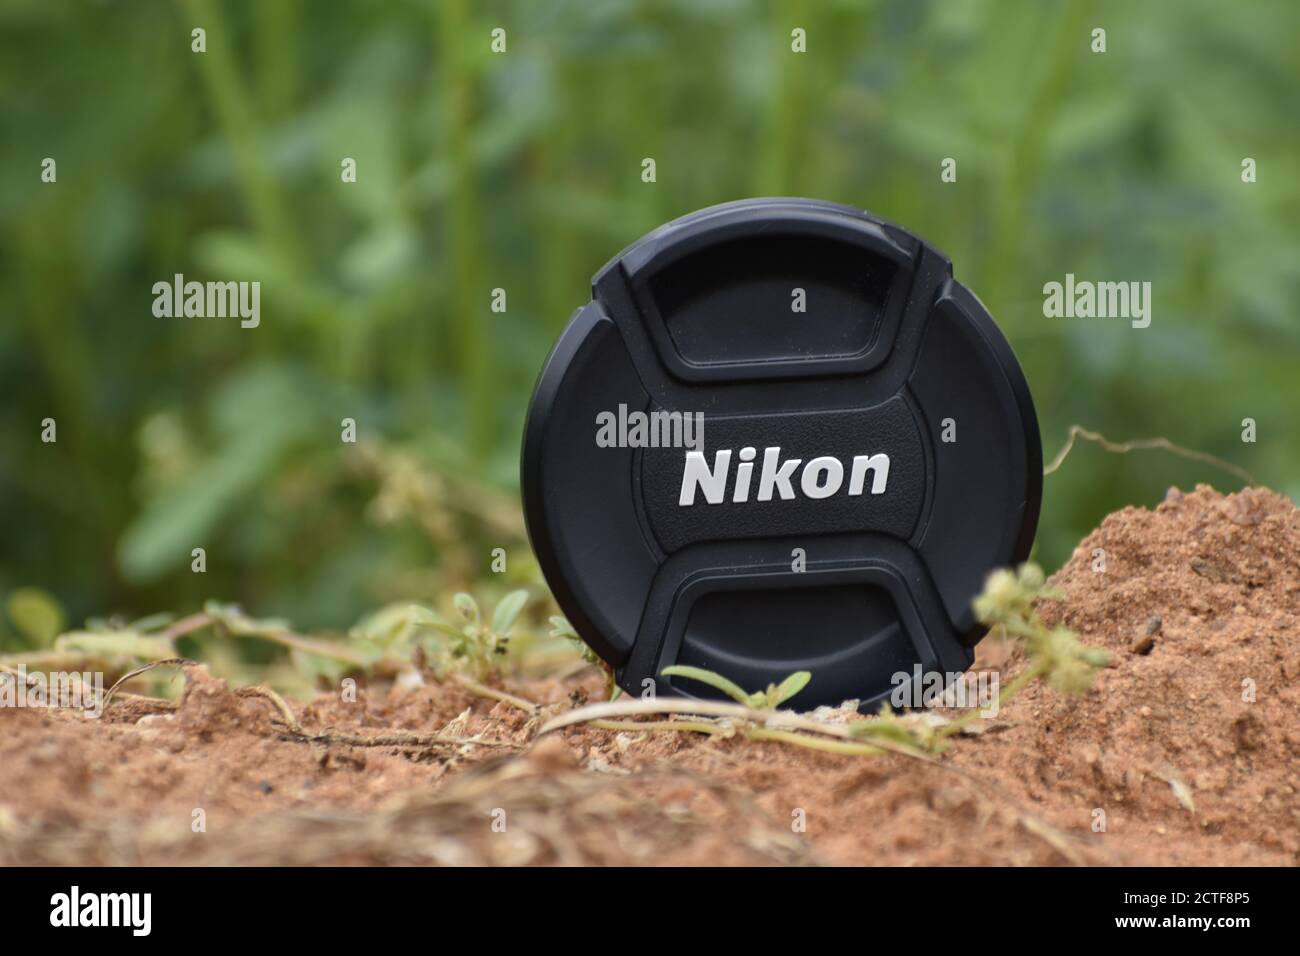 Nikon cap hi-res stock photography and images - Alamy